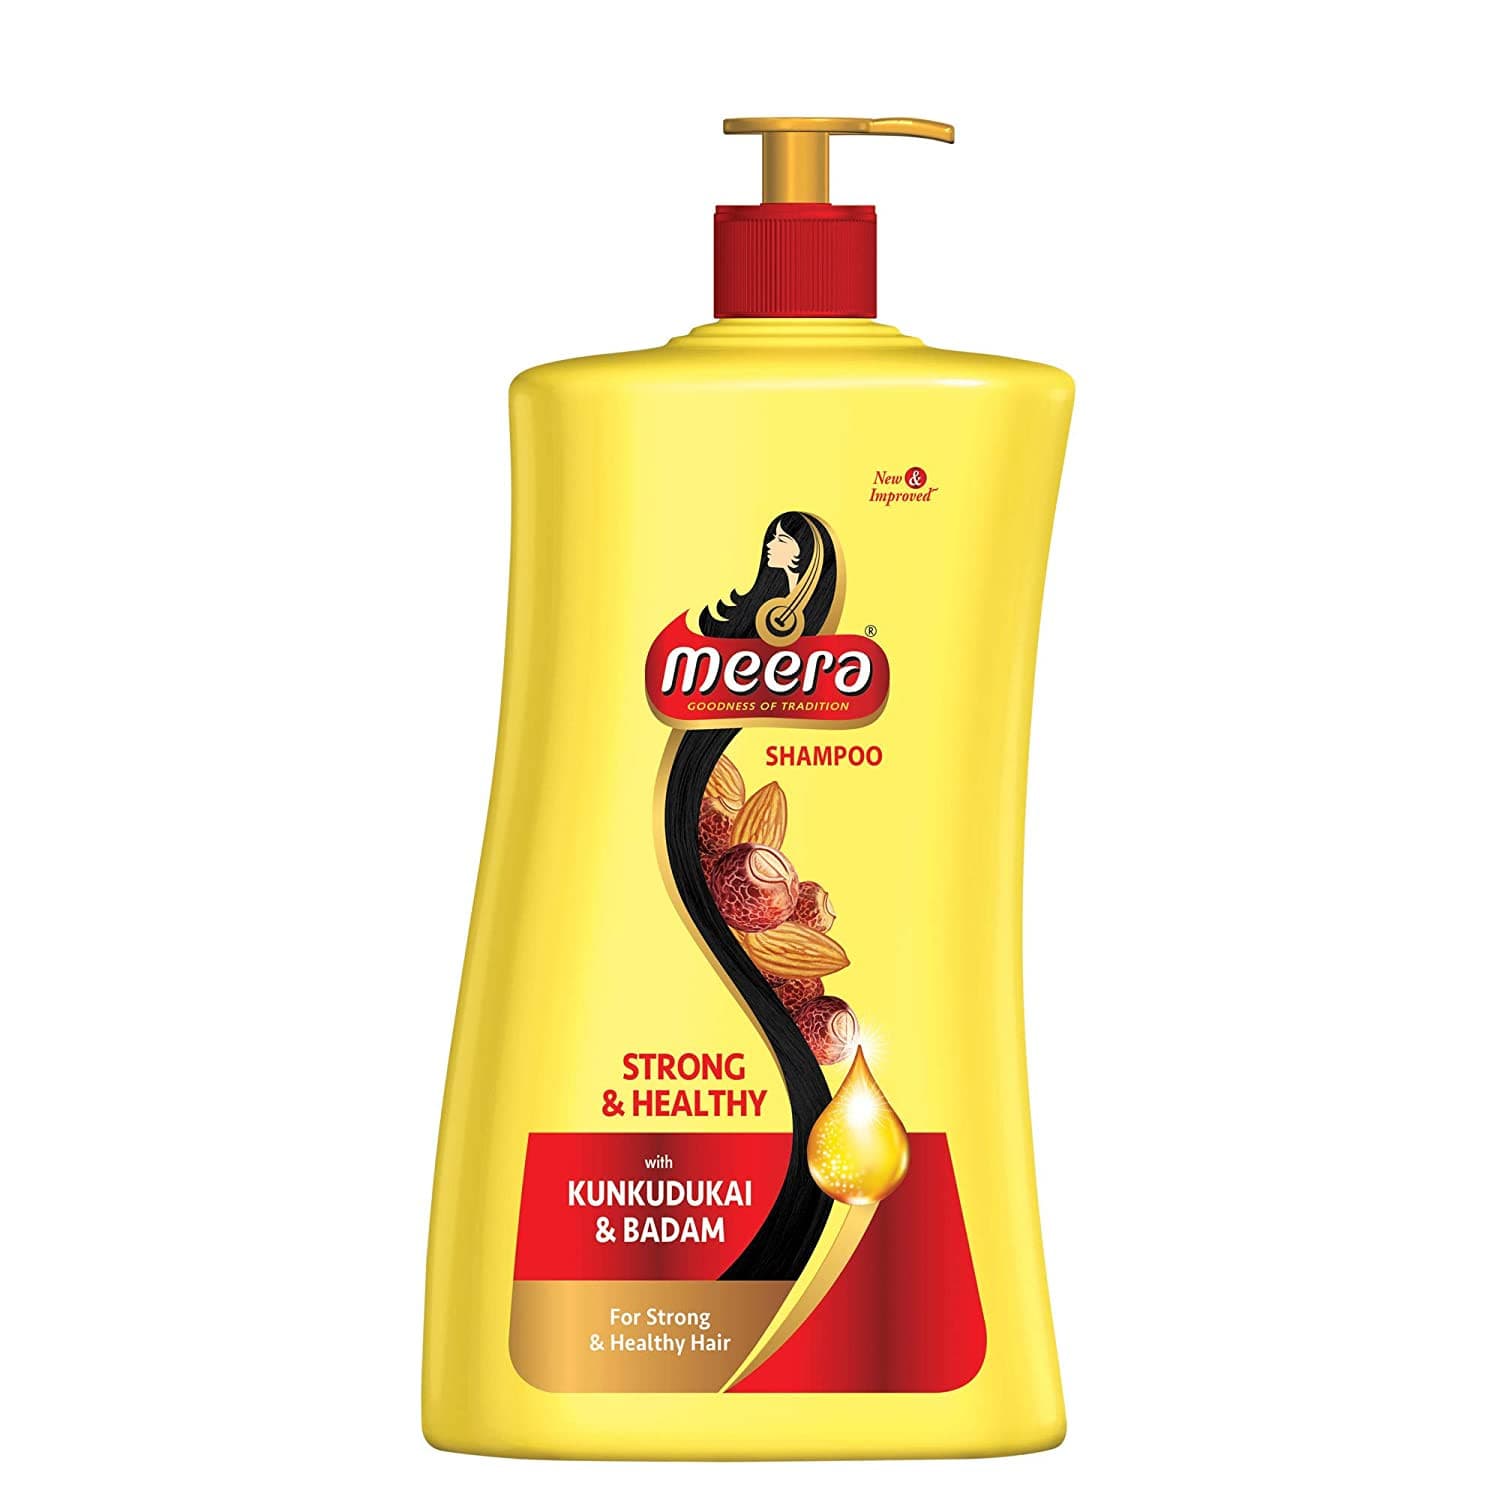 Meera Strong & Healthy Shampoo.